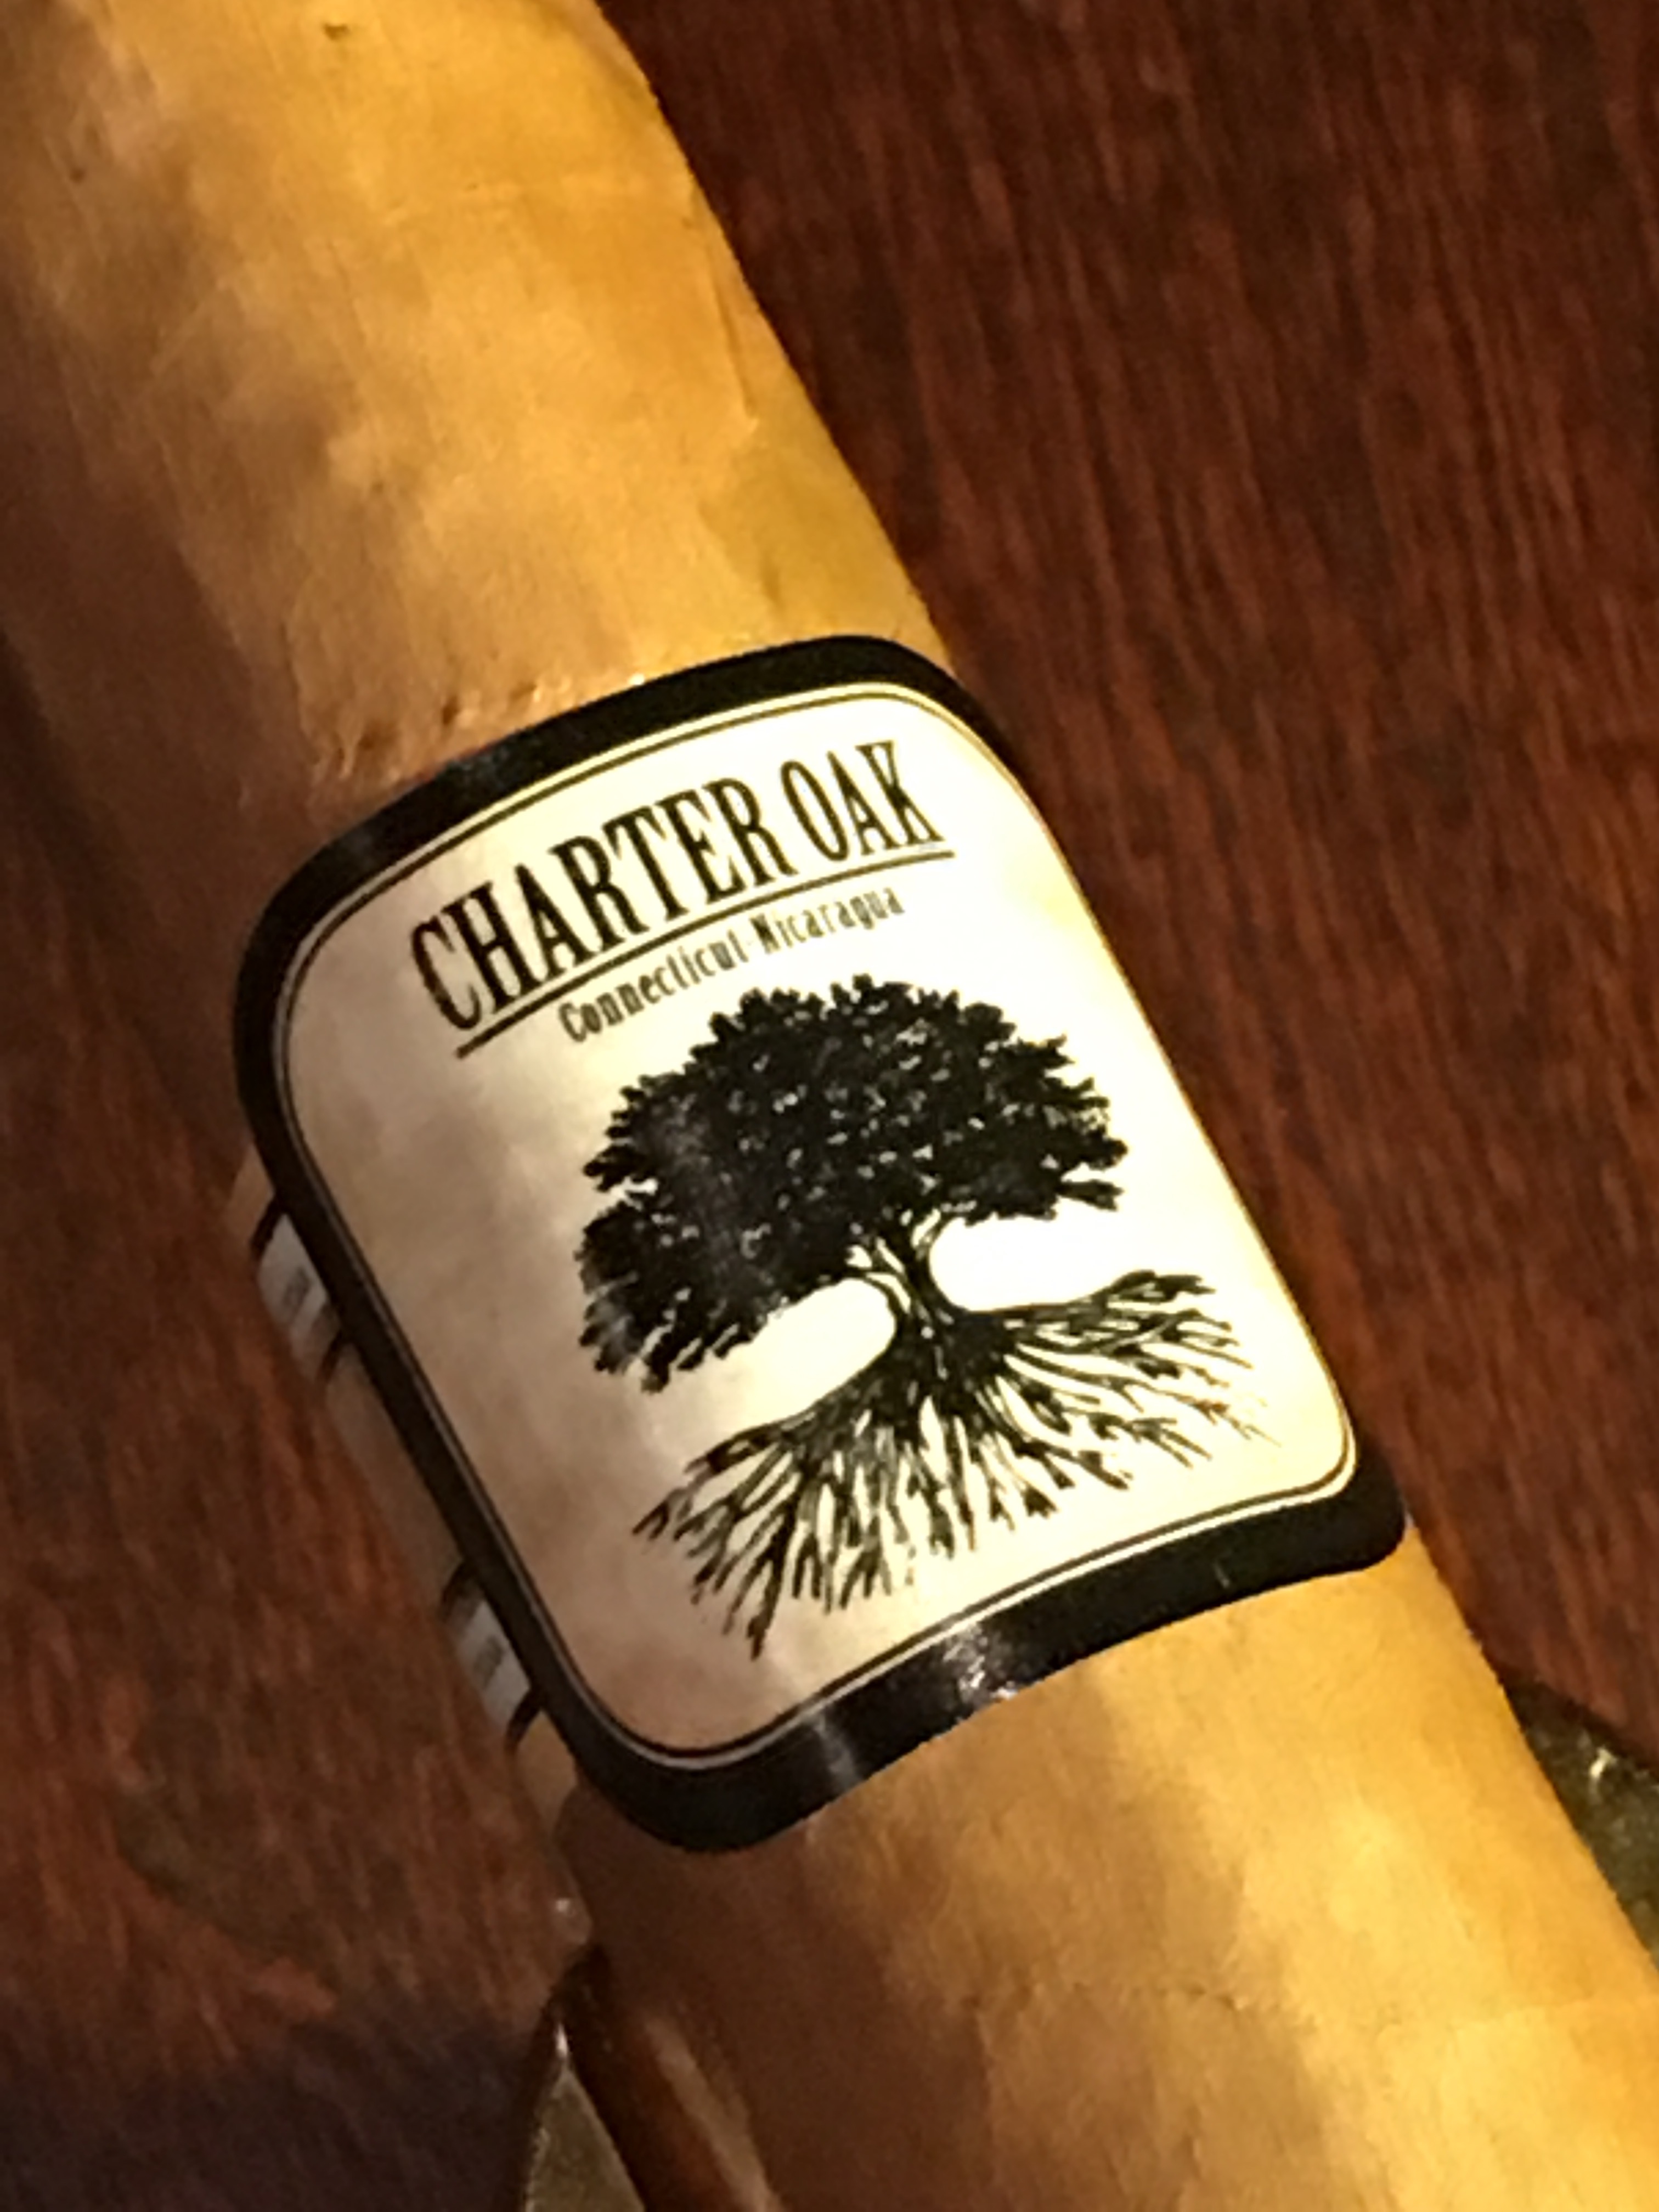 Foundation Cigars Charter Oak Connecticut Rothchild